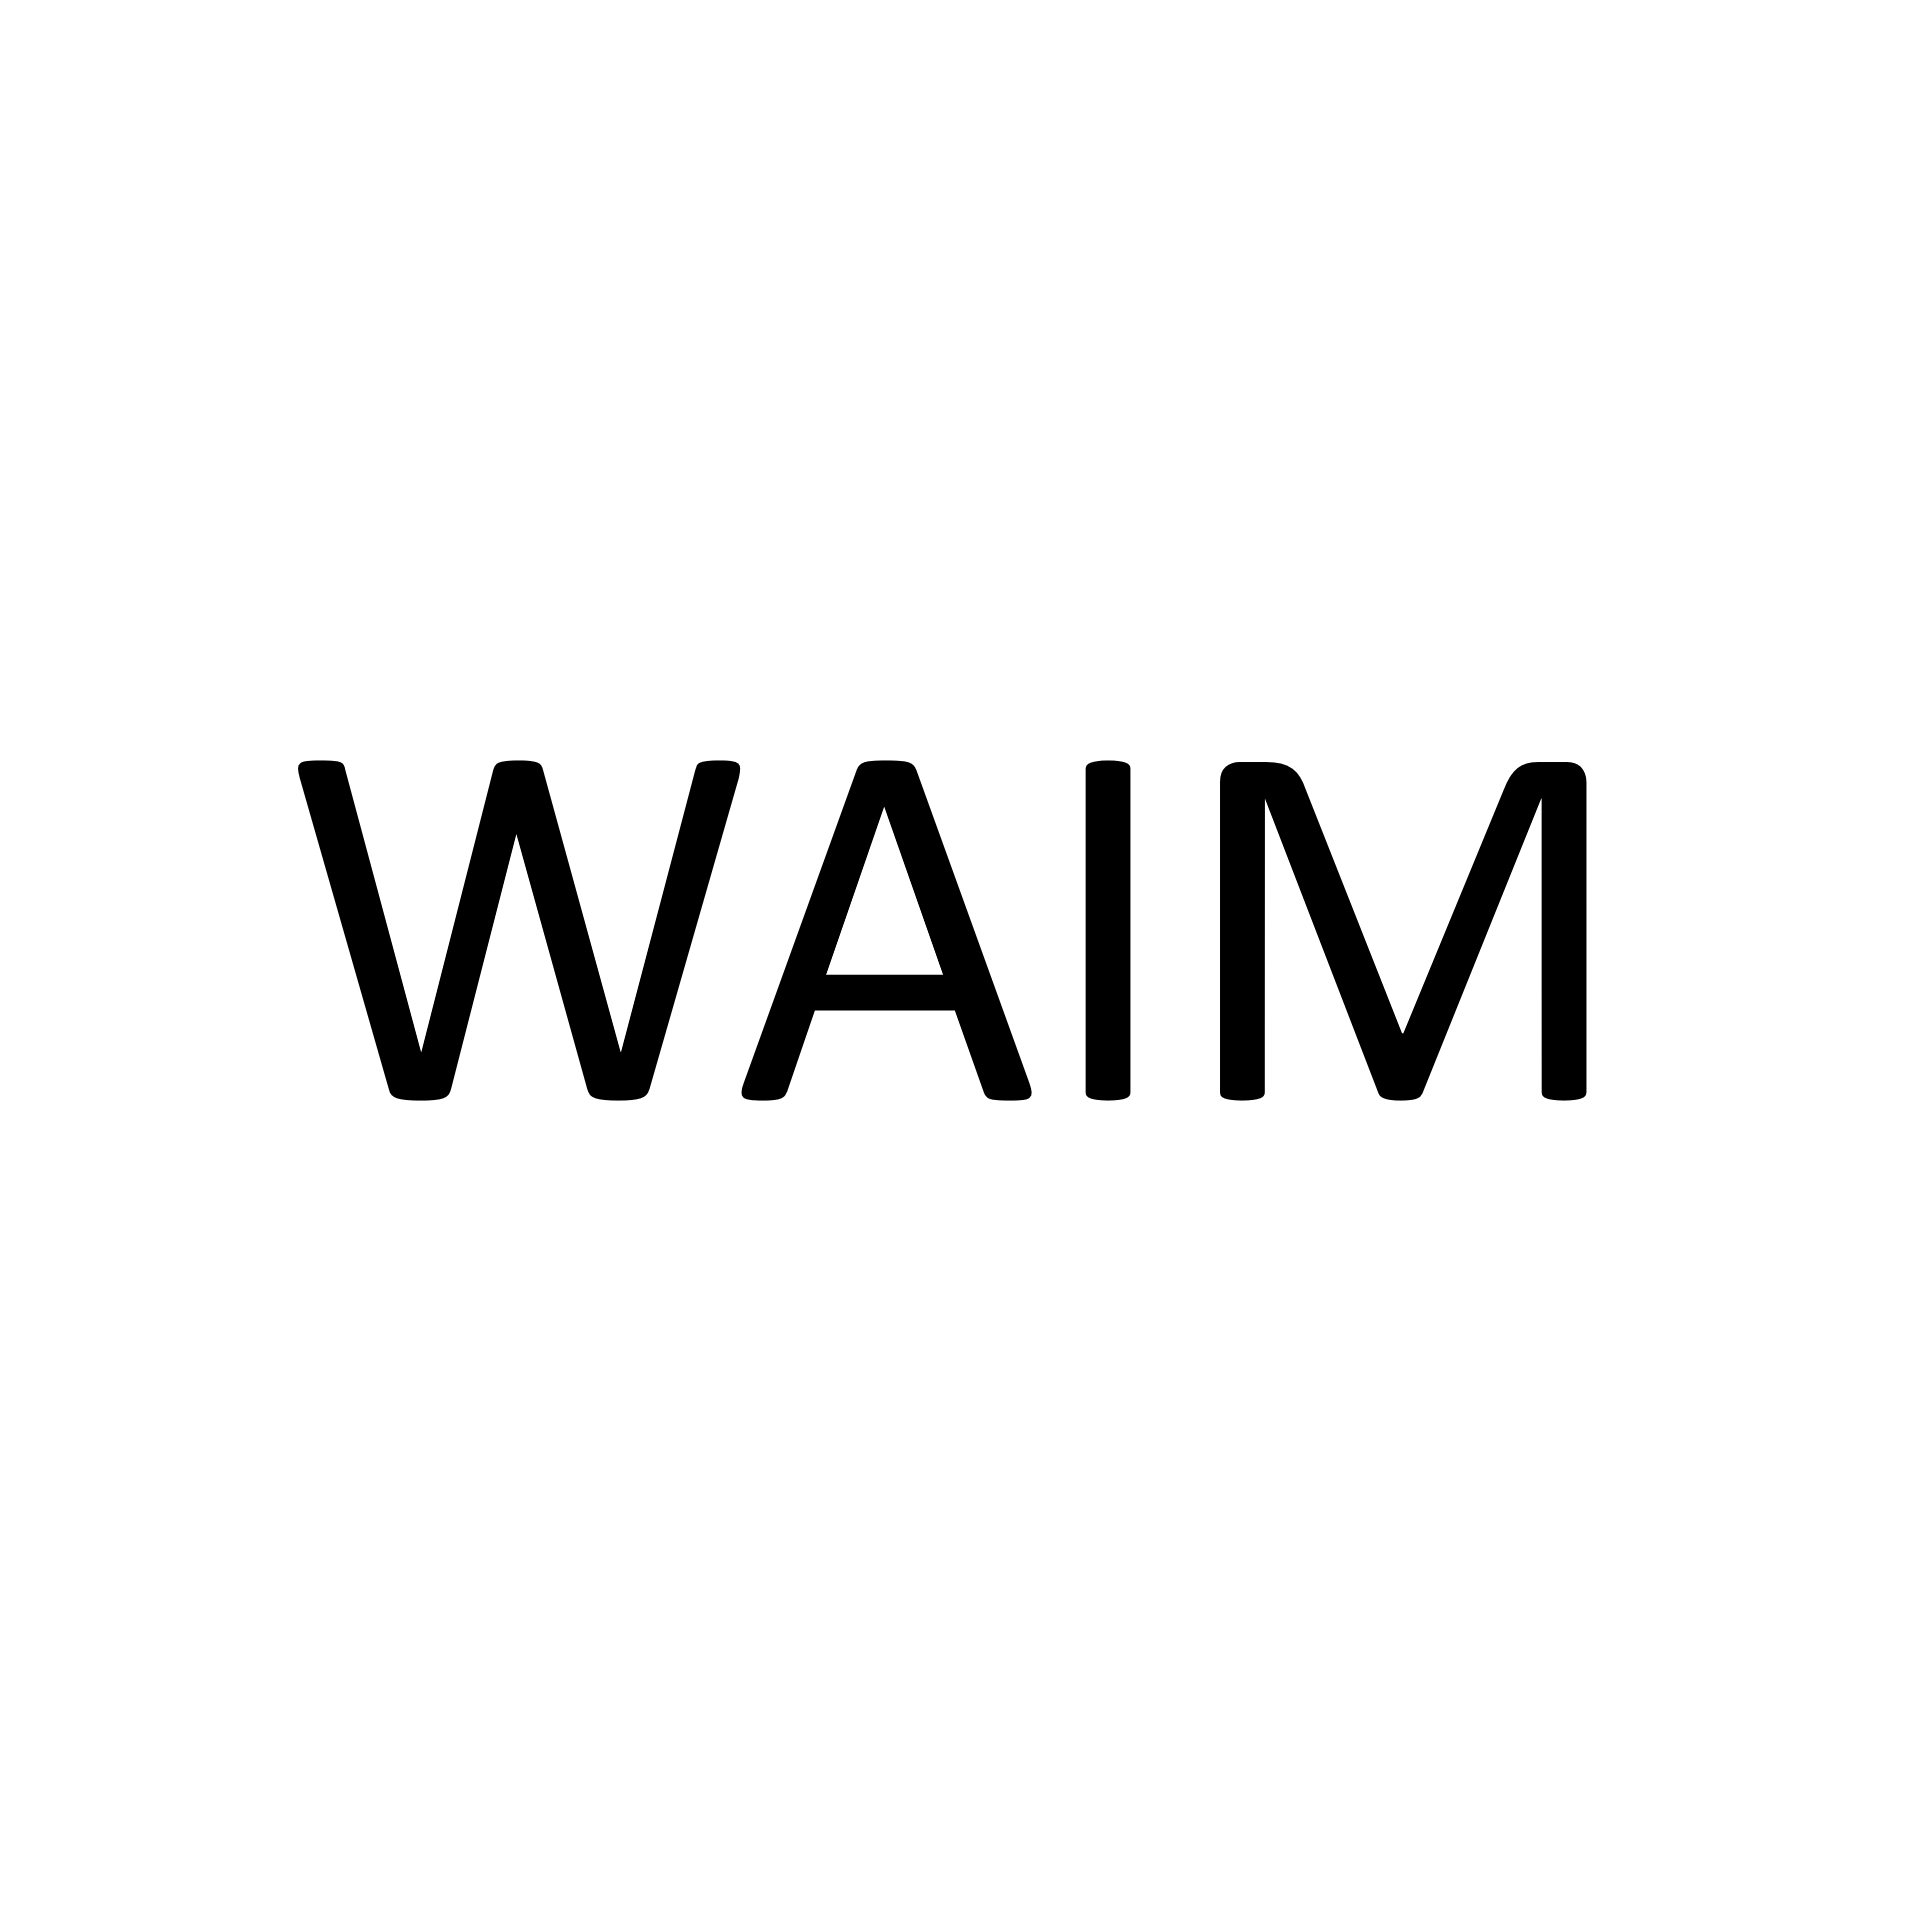 WAIM - What am I missing?